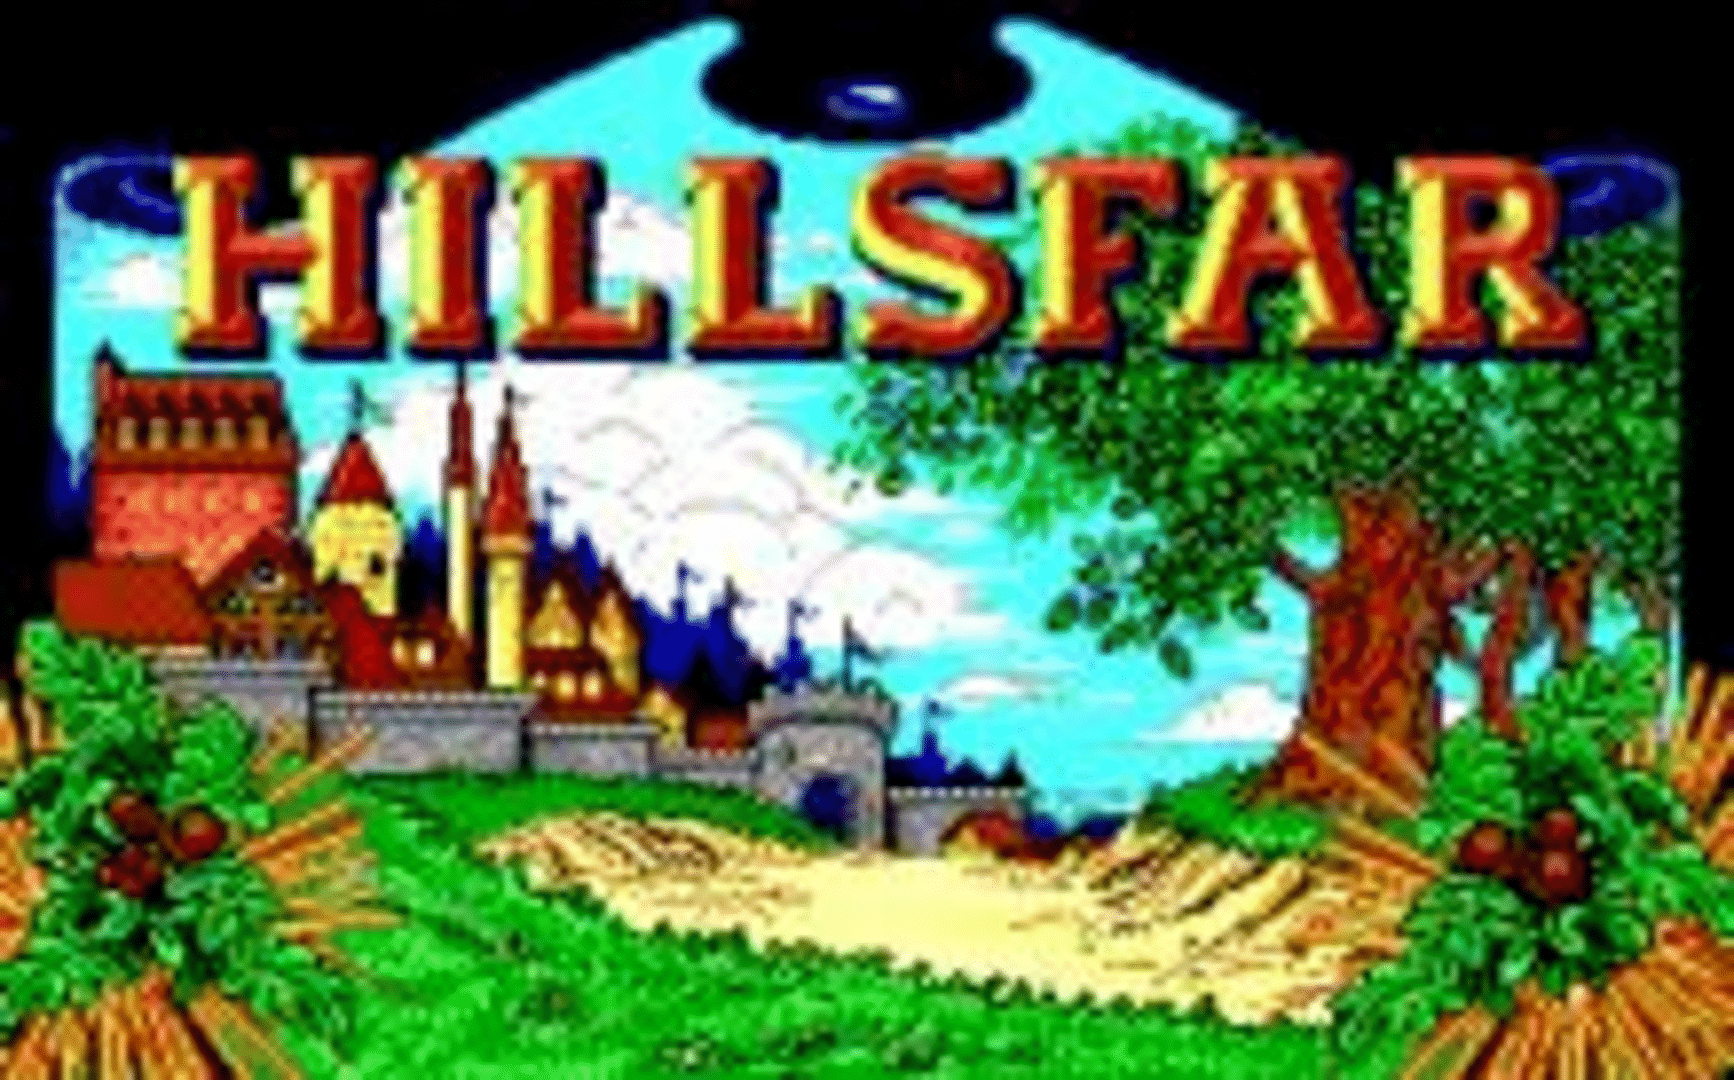 Advanced Dungeons & Dragons: Hillsfar screenshot